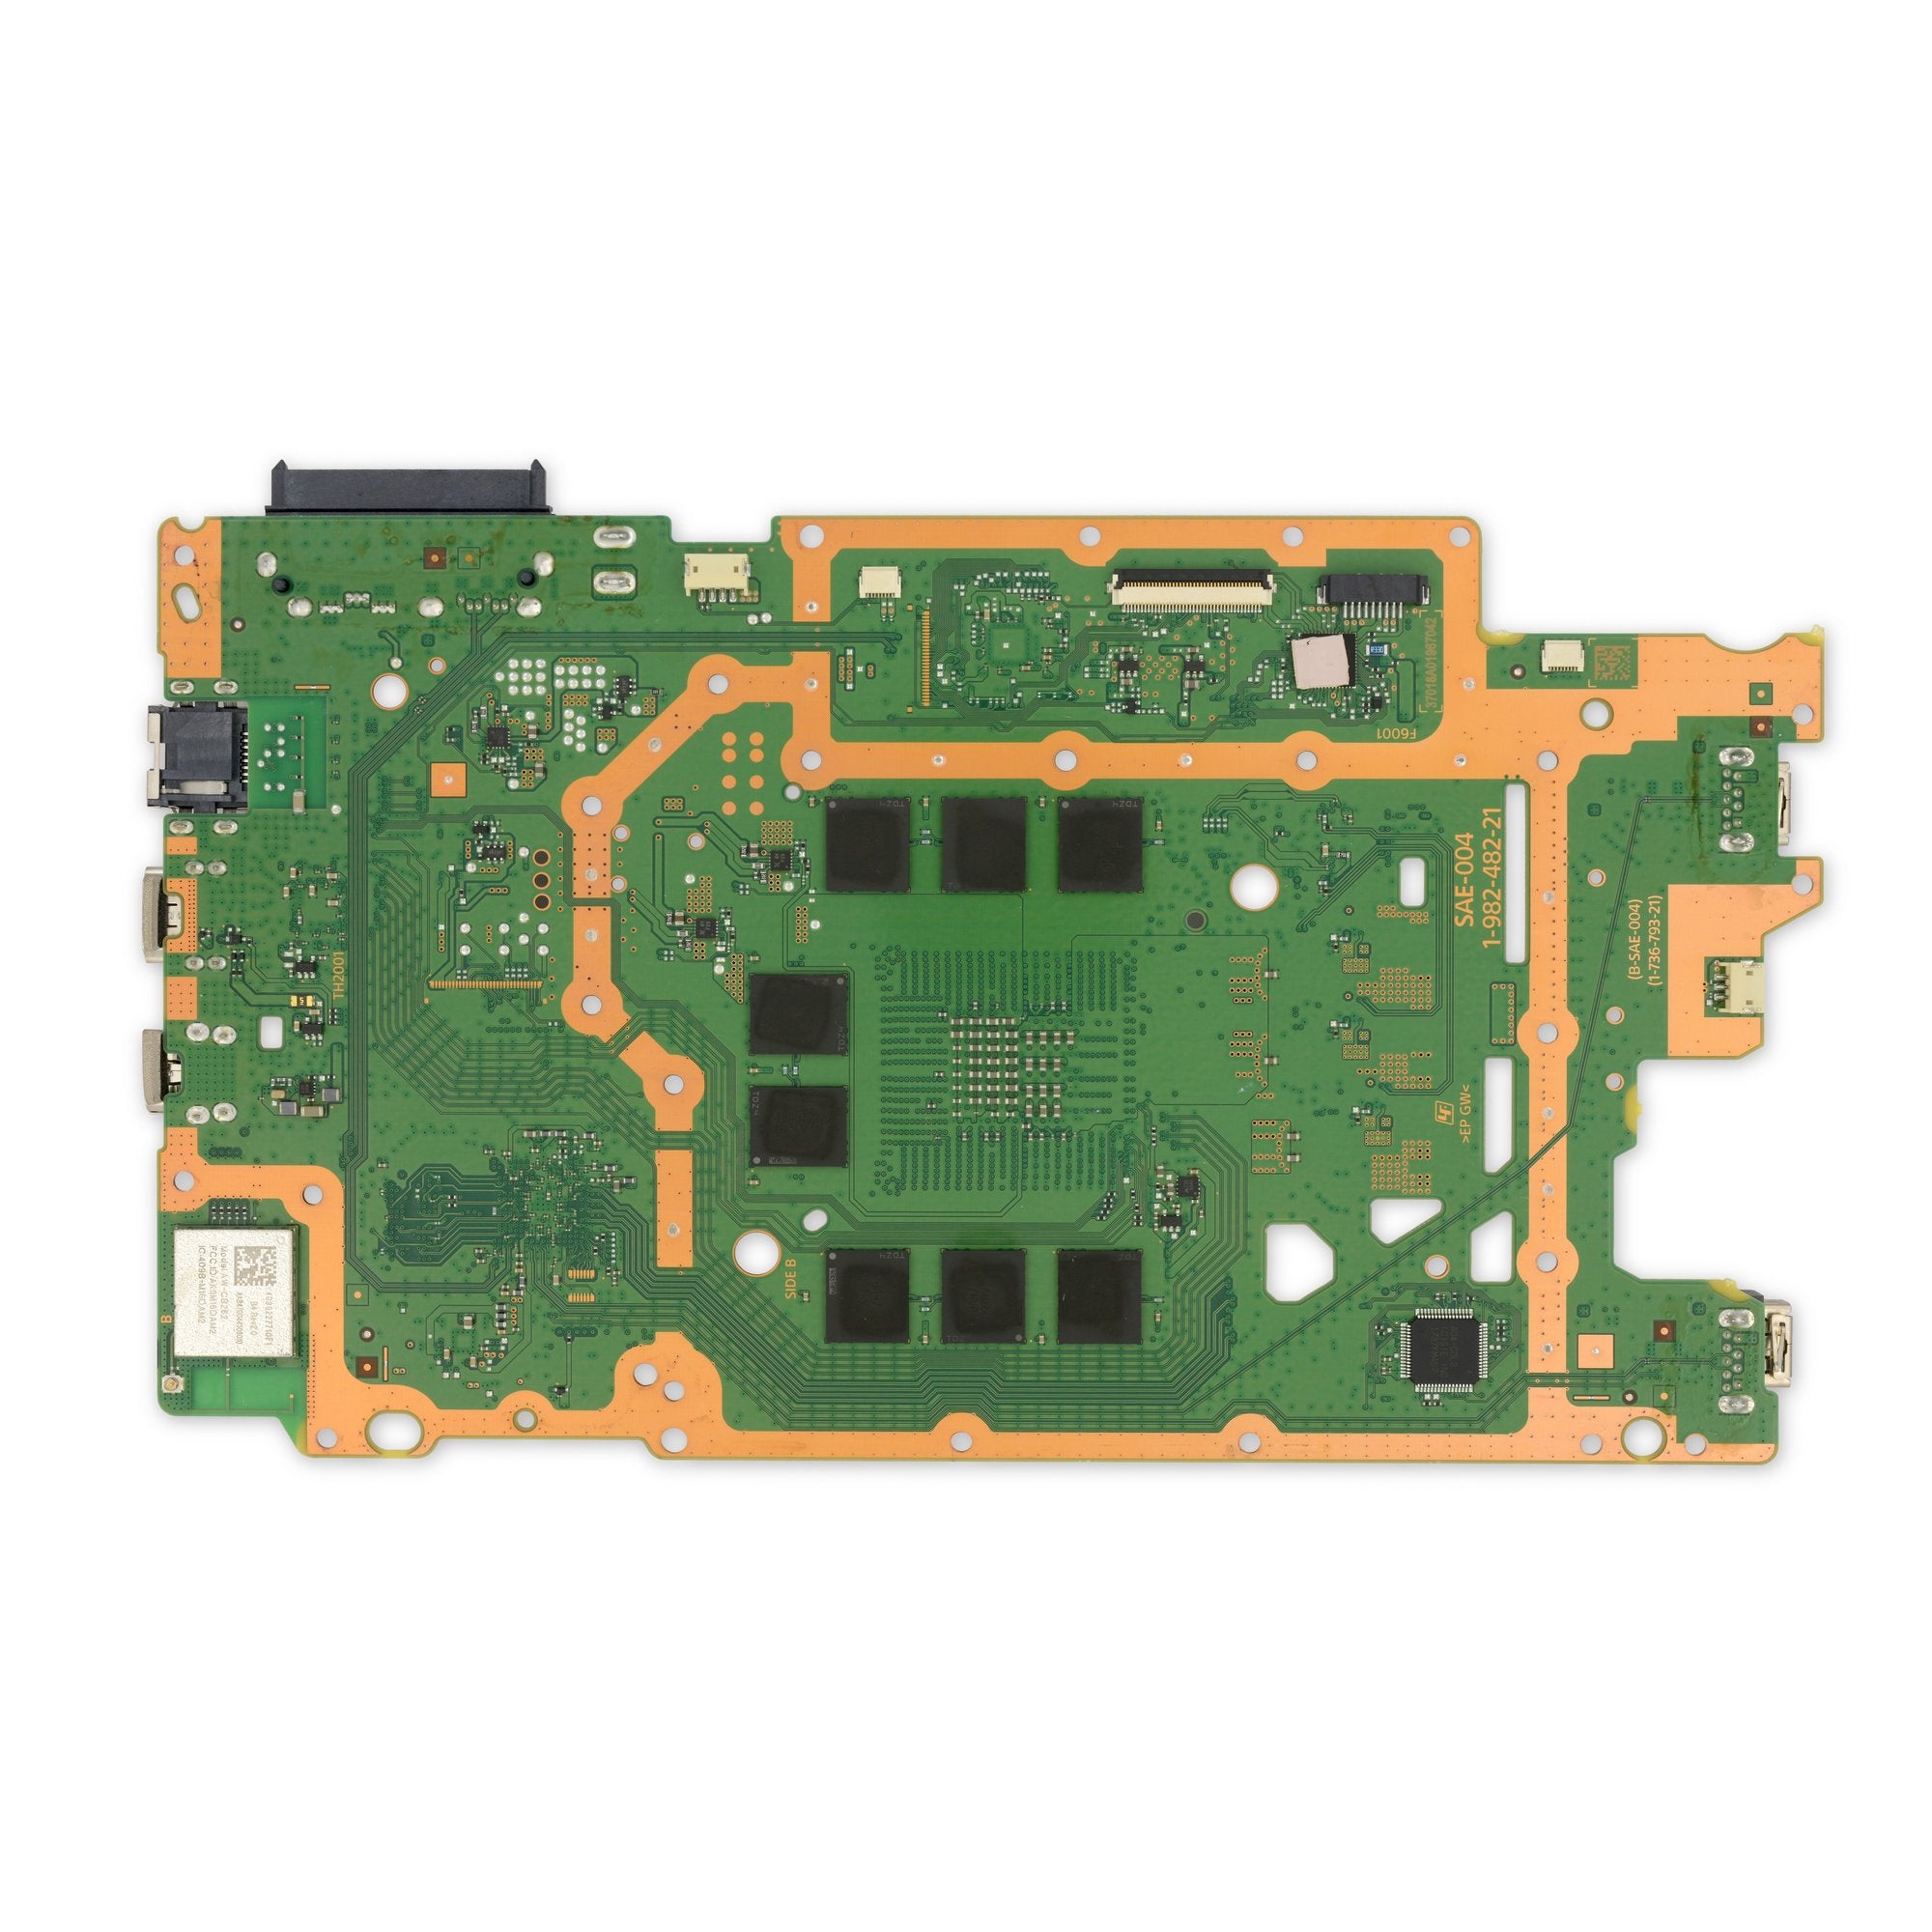 PlayStation 4 Slim (CUH-21xx) Motherboard (SAE-00x) Used SAE-004